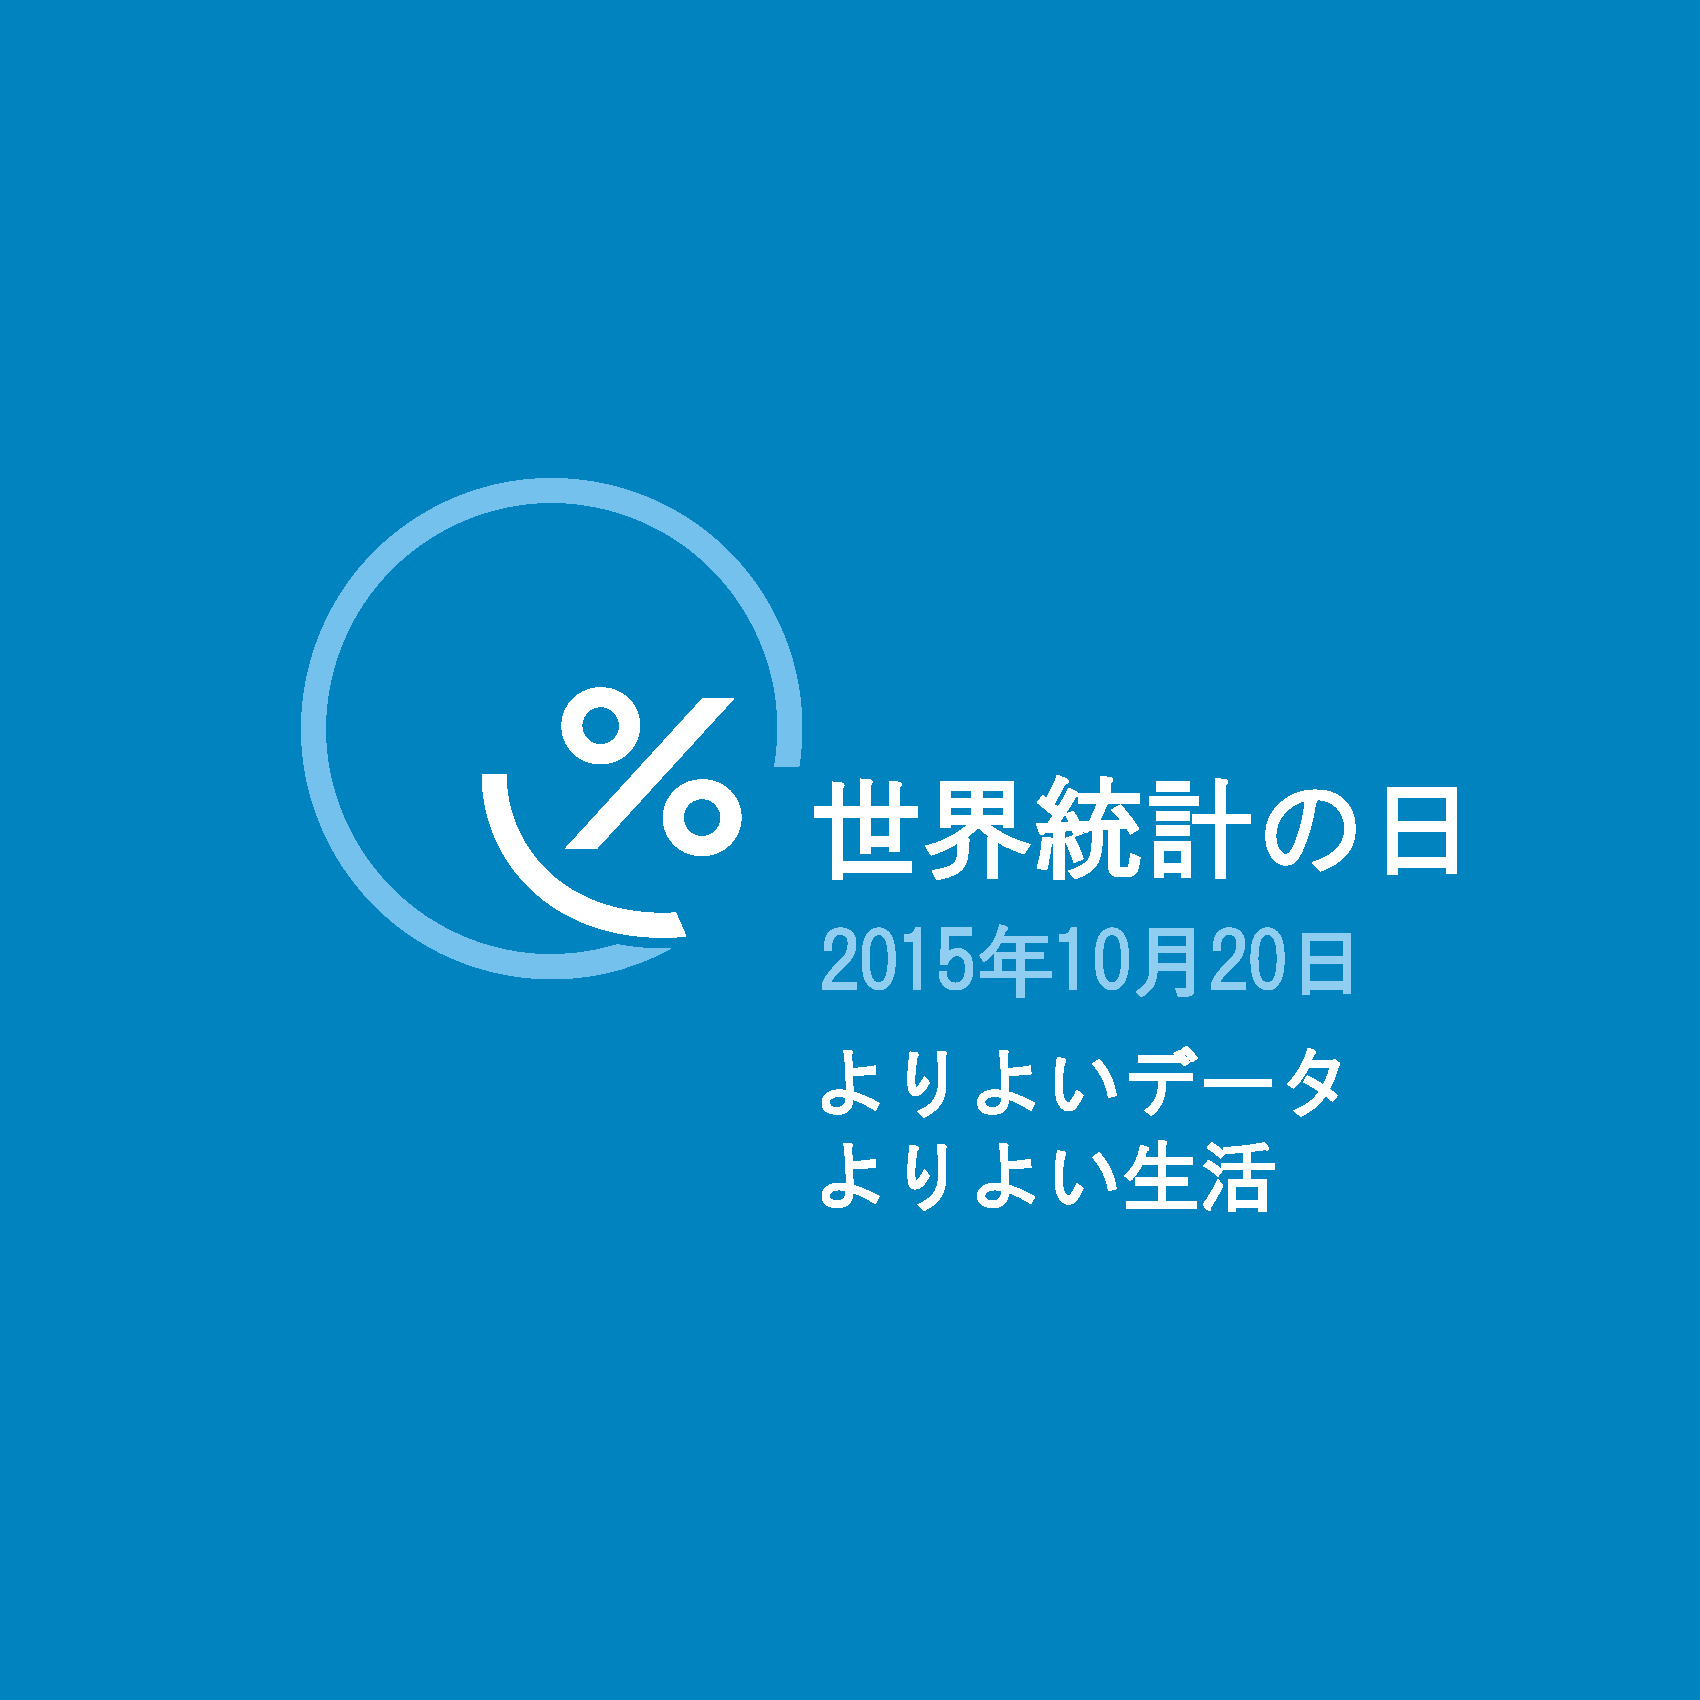 World Statistics Day Logo in Japanese